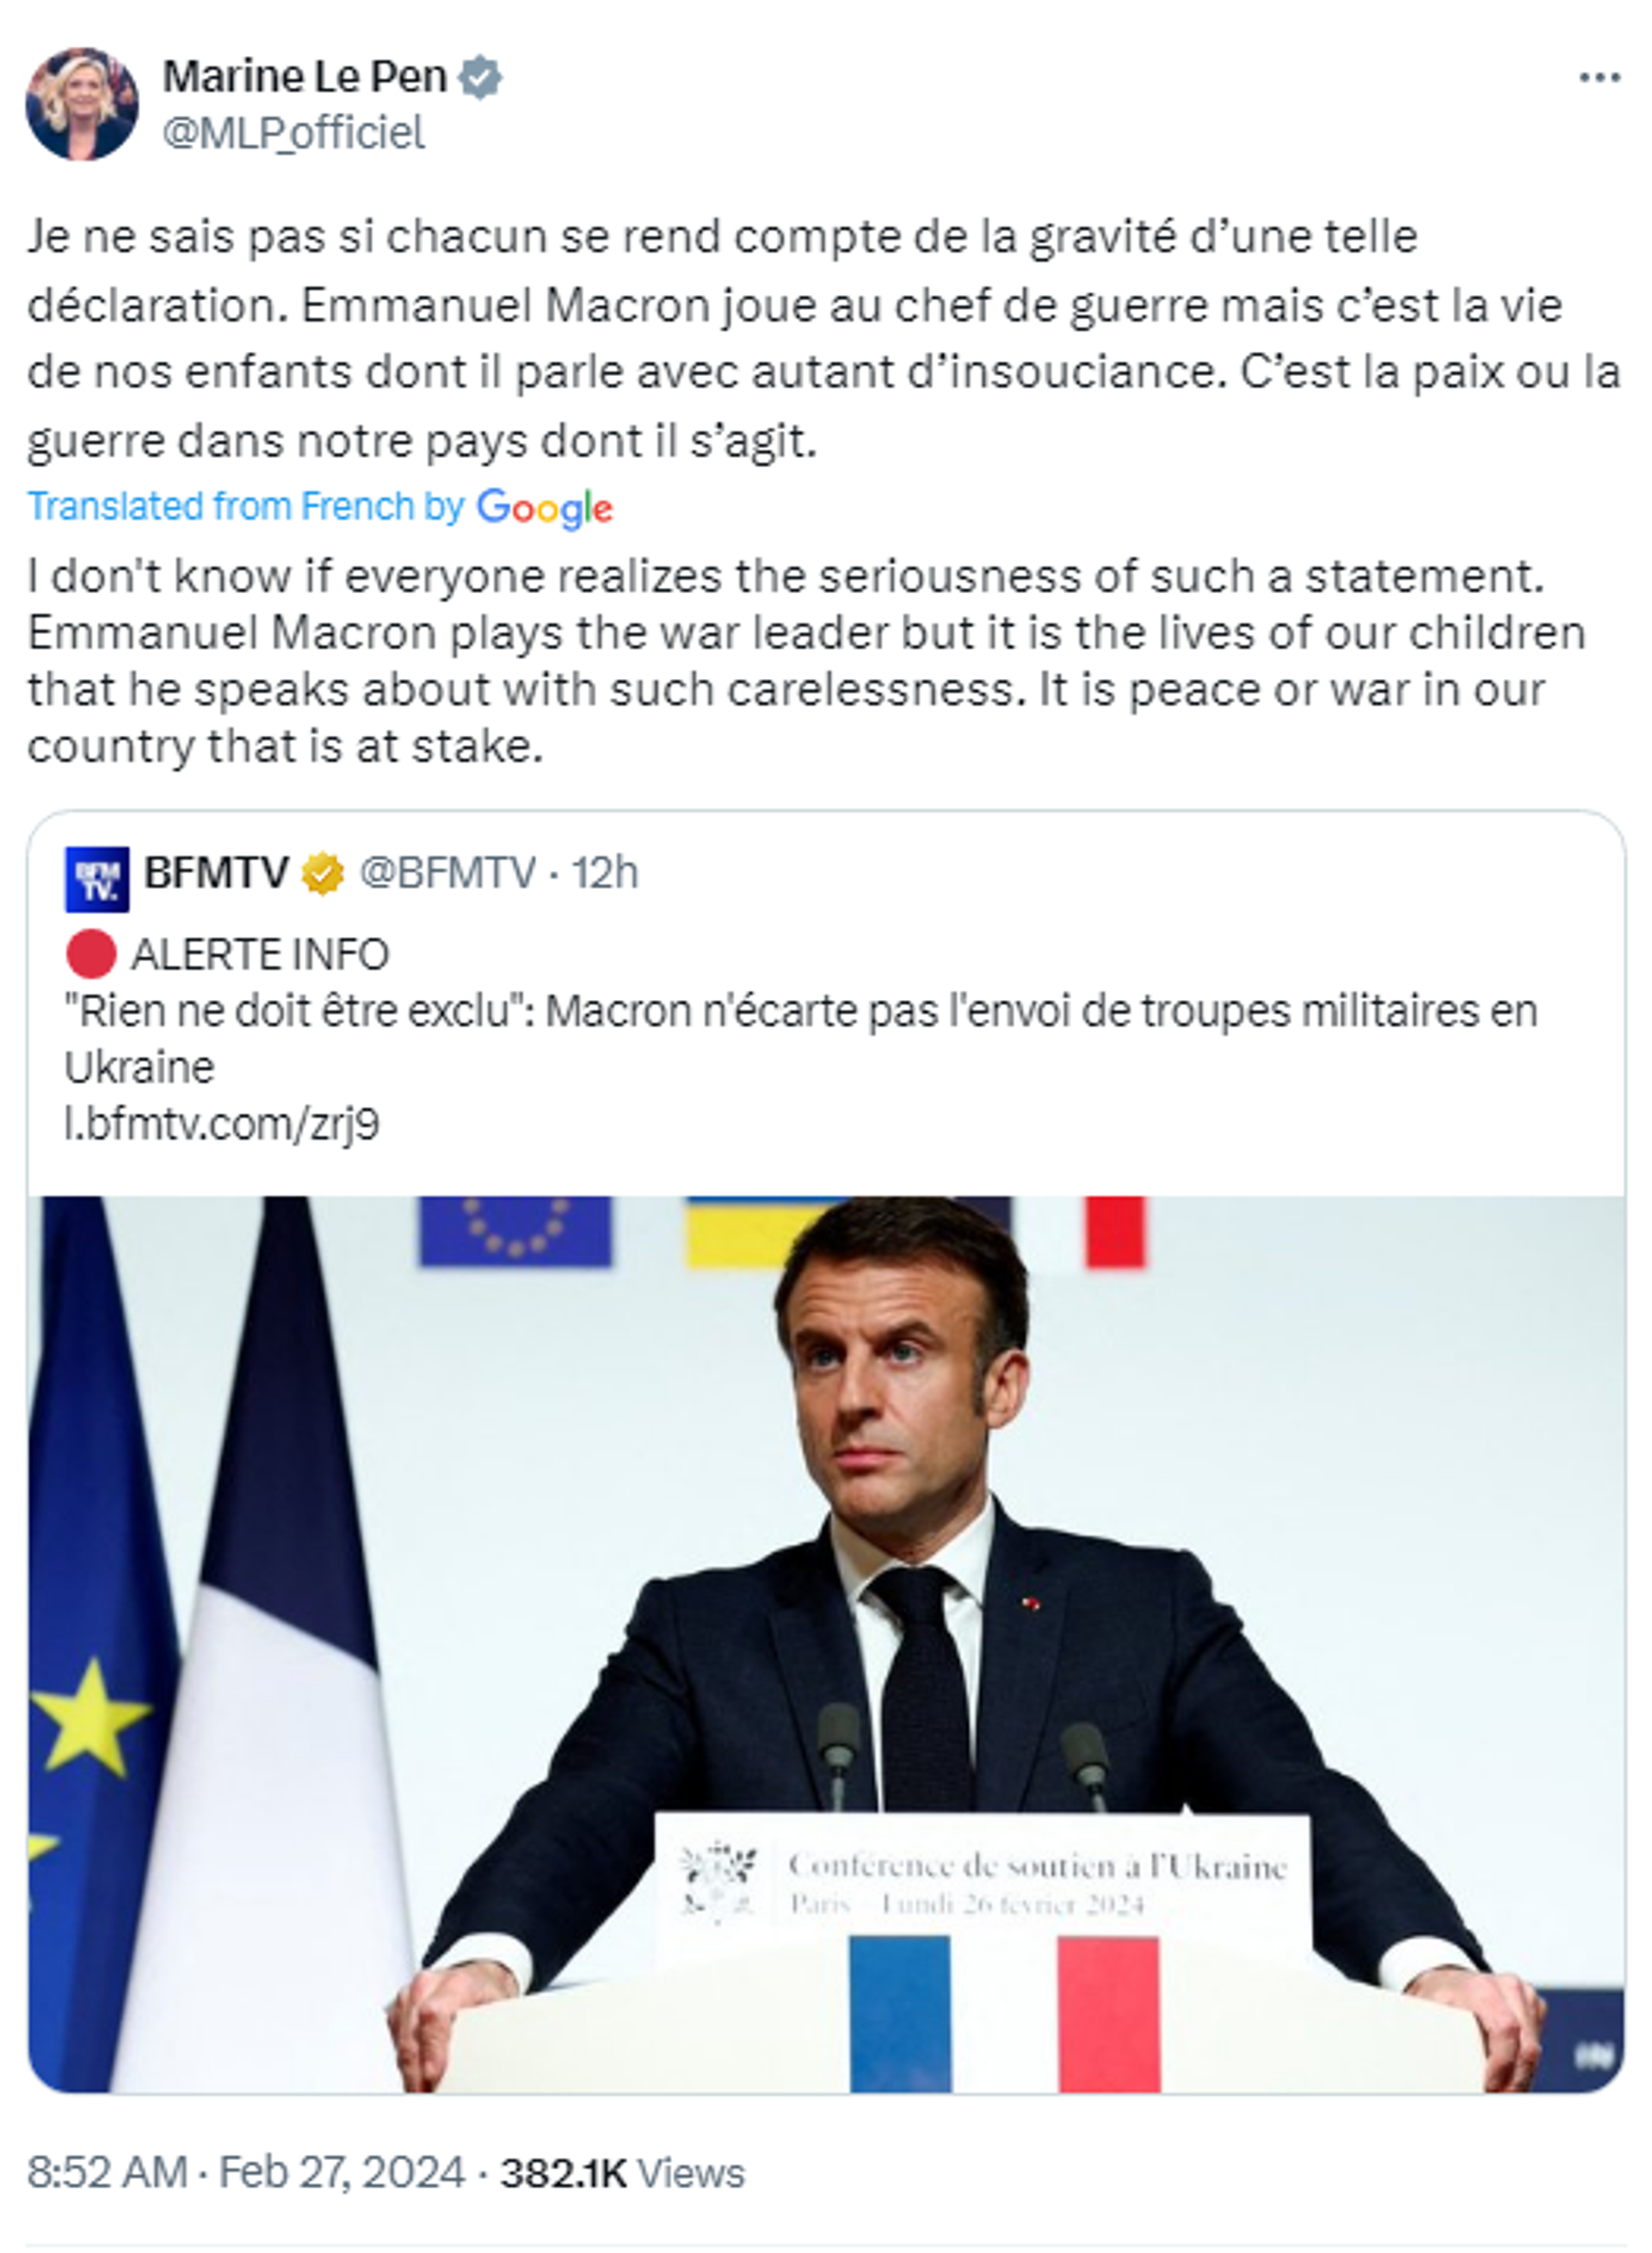 Screenshot of X post by French politician Marine le Pen. - Sputnik International, 1920, 27.02.2024